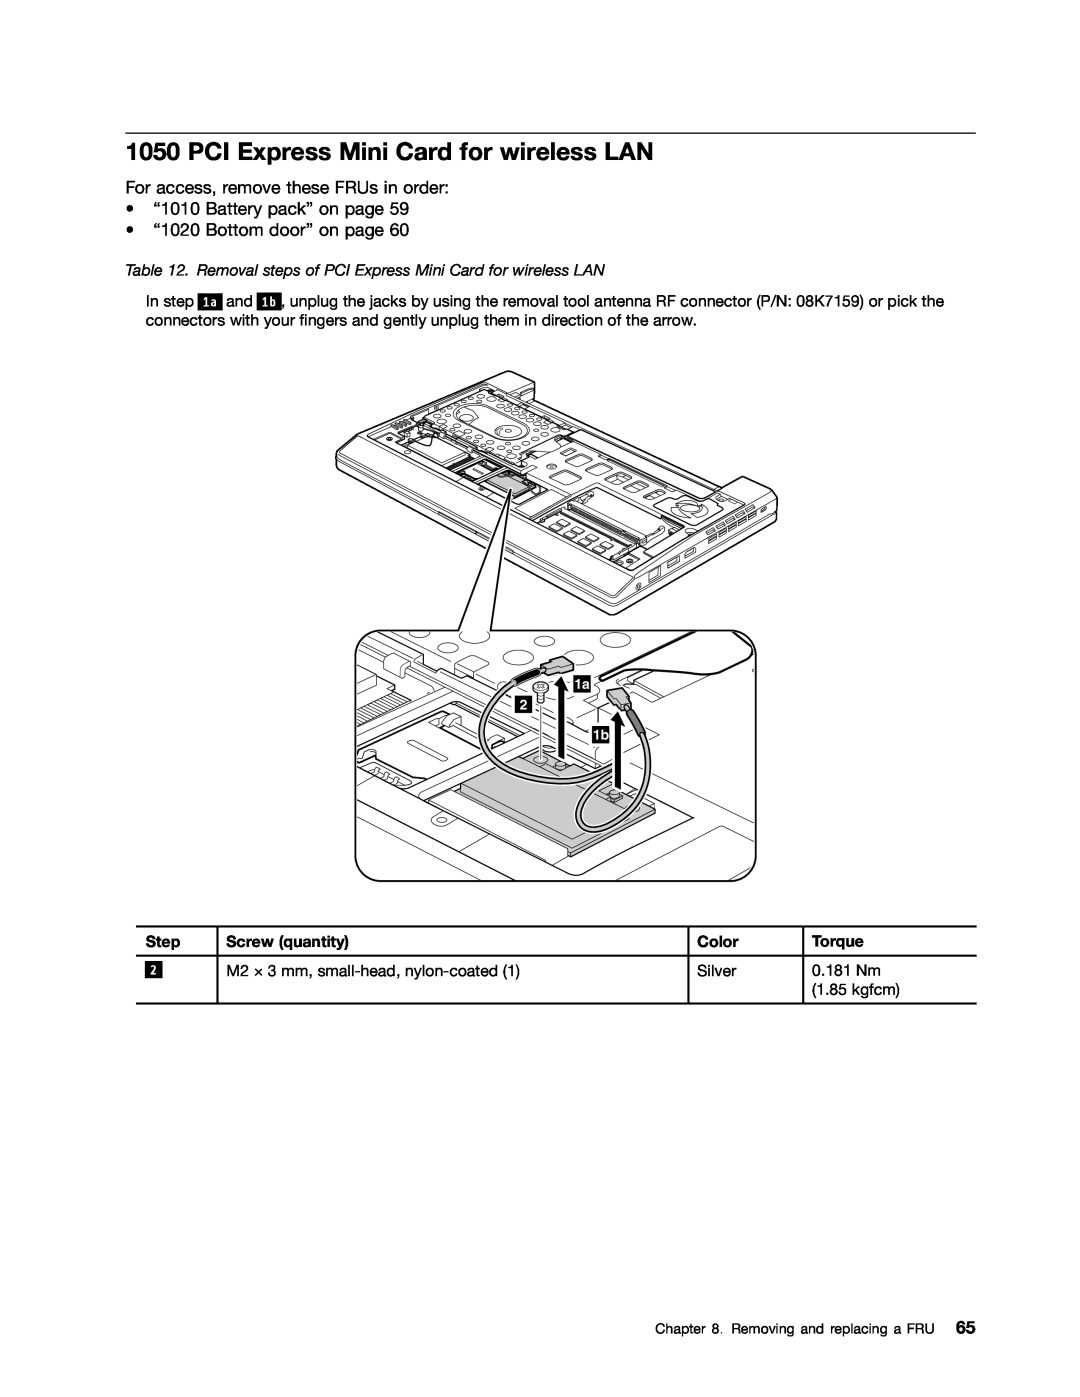 Lenovo E10 manual Removal steps of PCI Express Mini Card for wireless LAN 